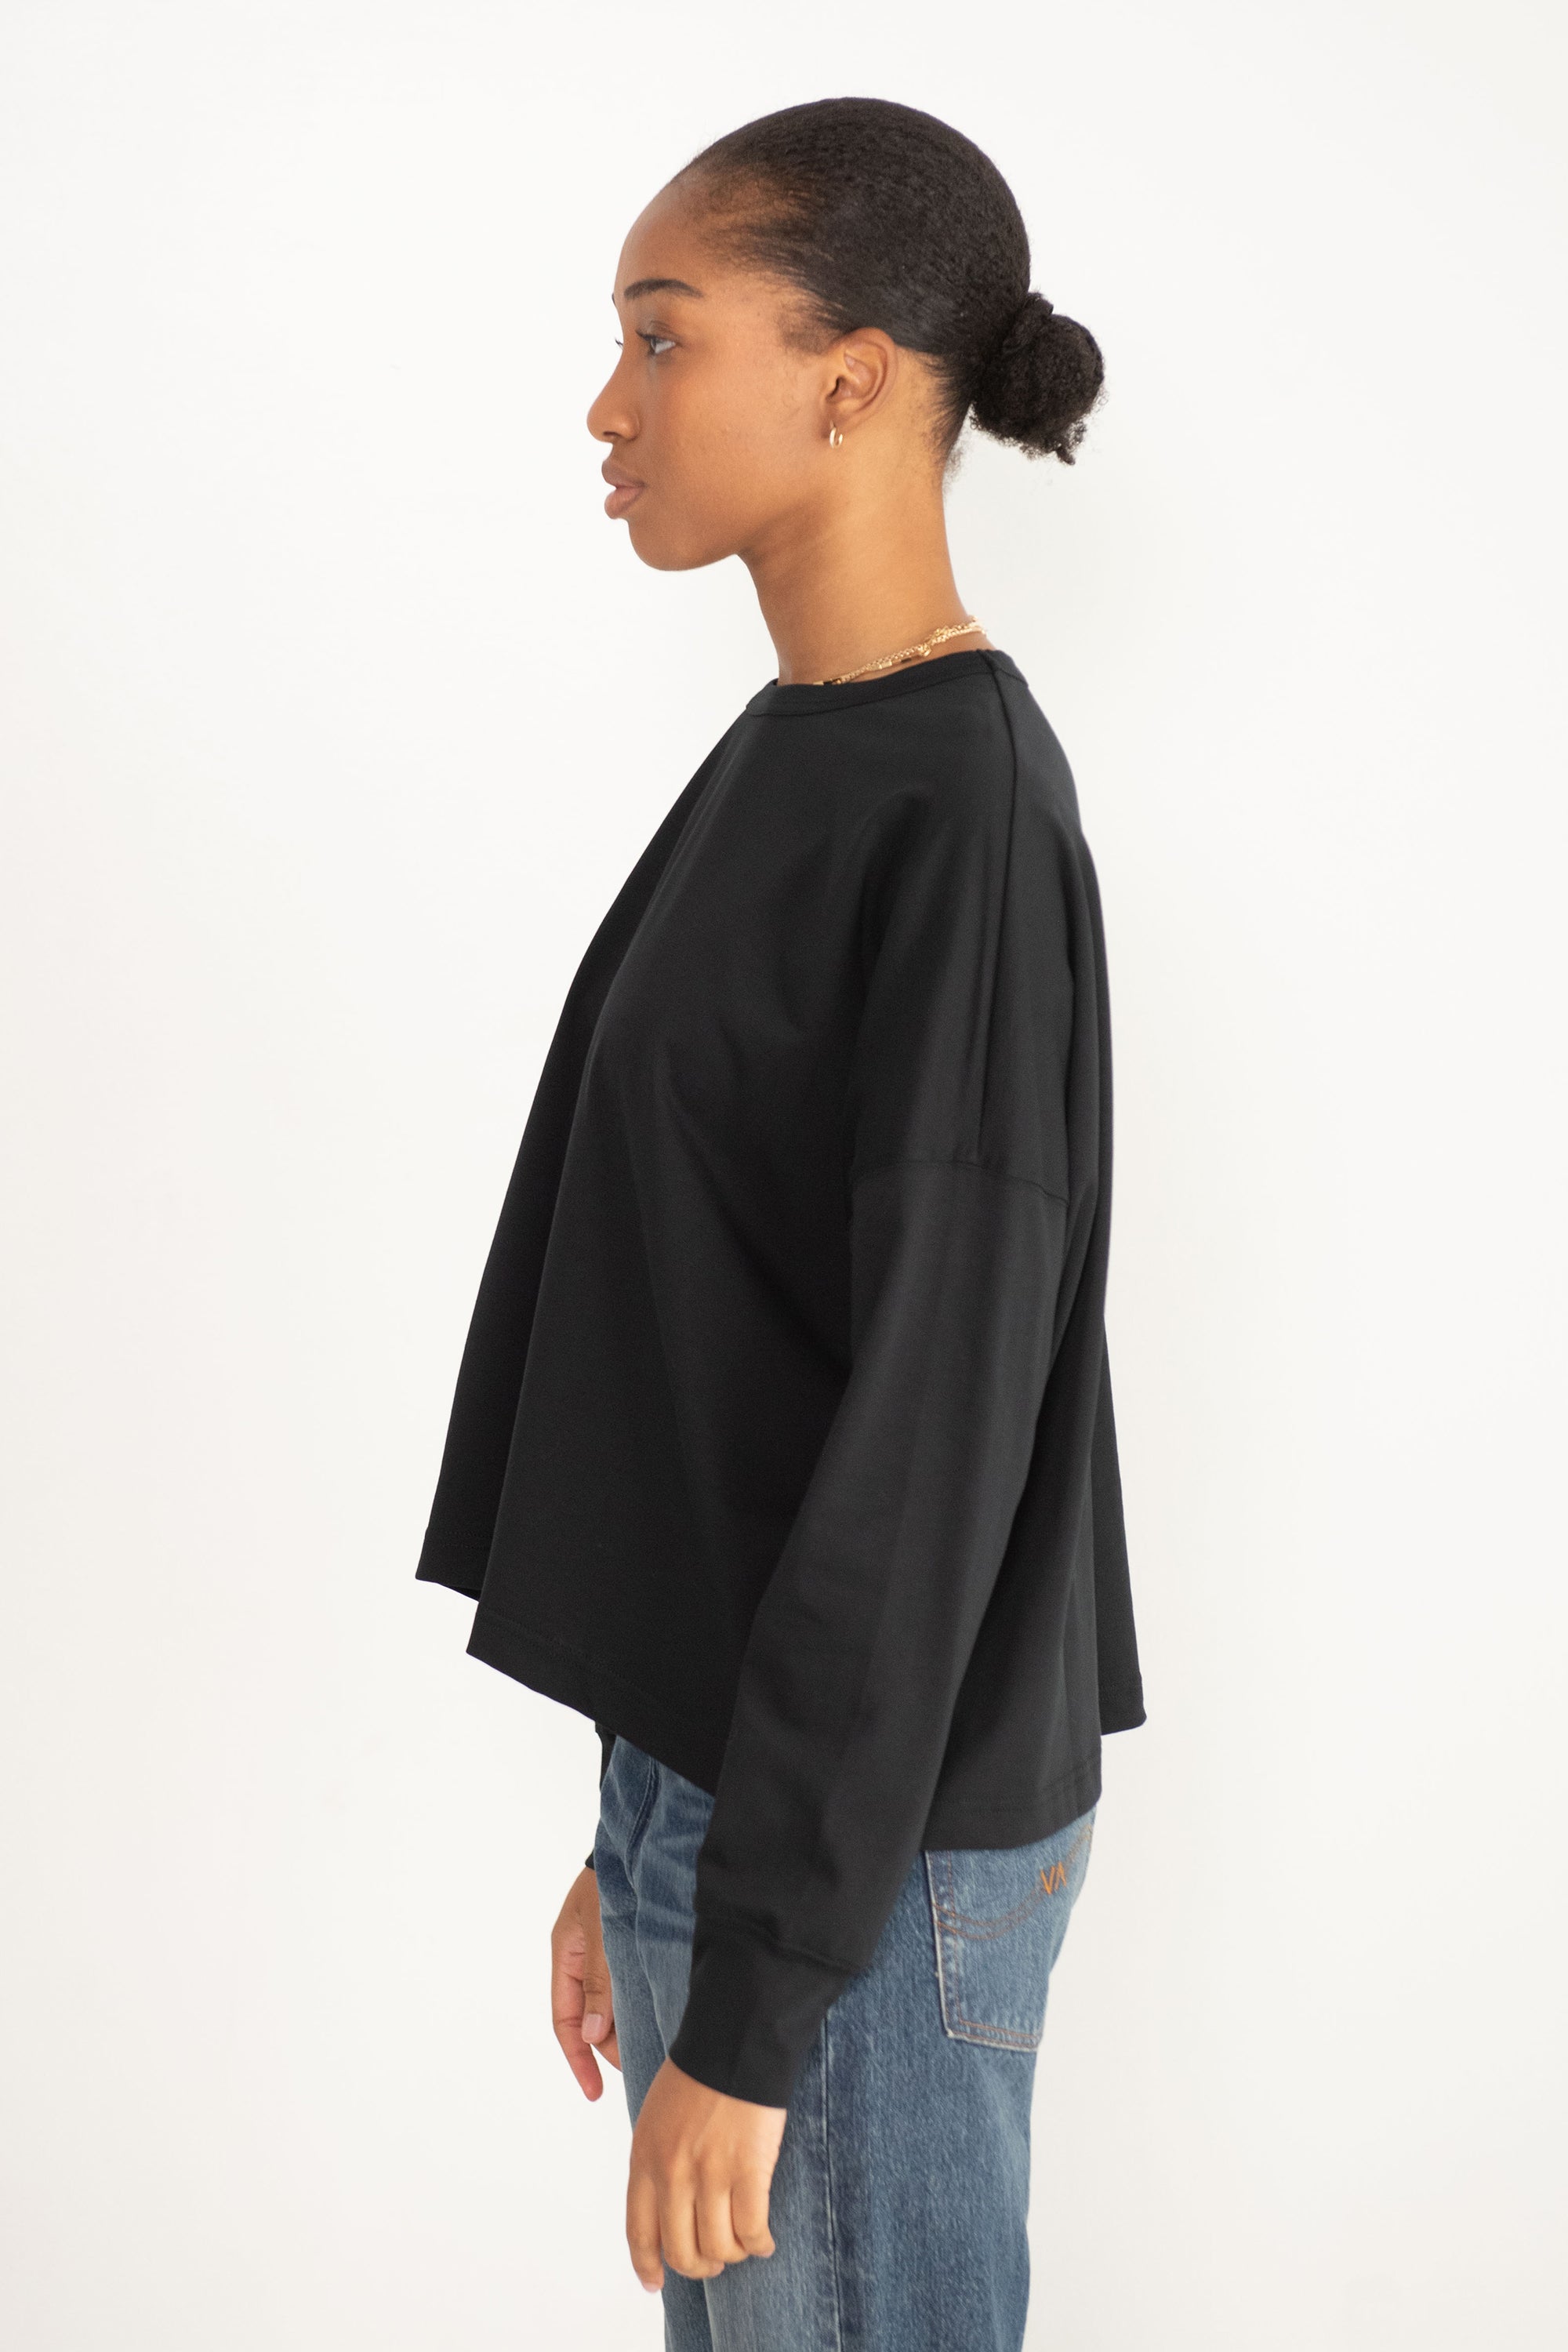 Studio NIcholson Loop Long Sleeve T-Shirt, Black – Kick Pleat